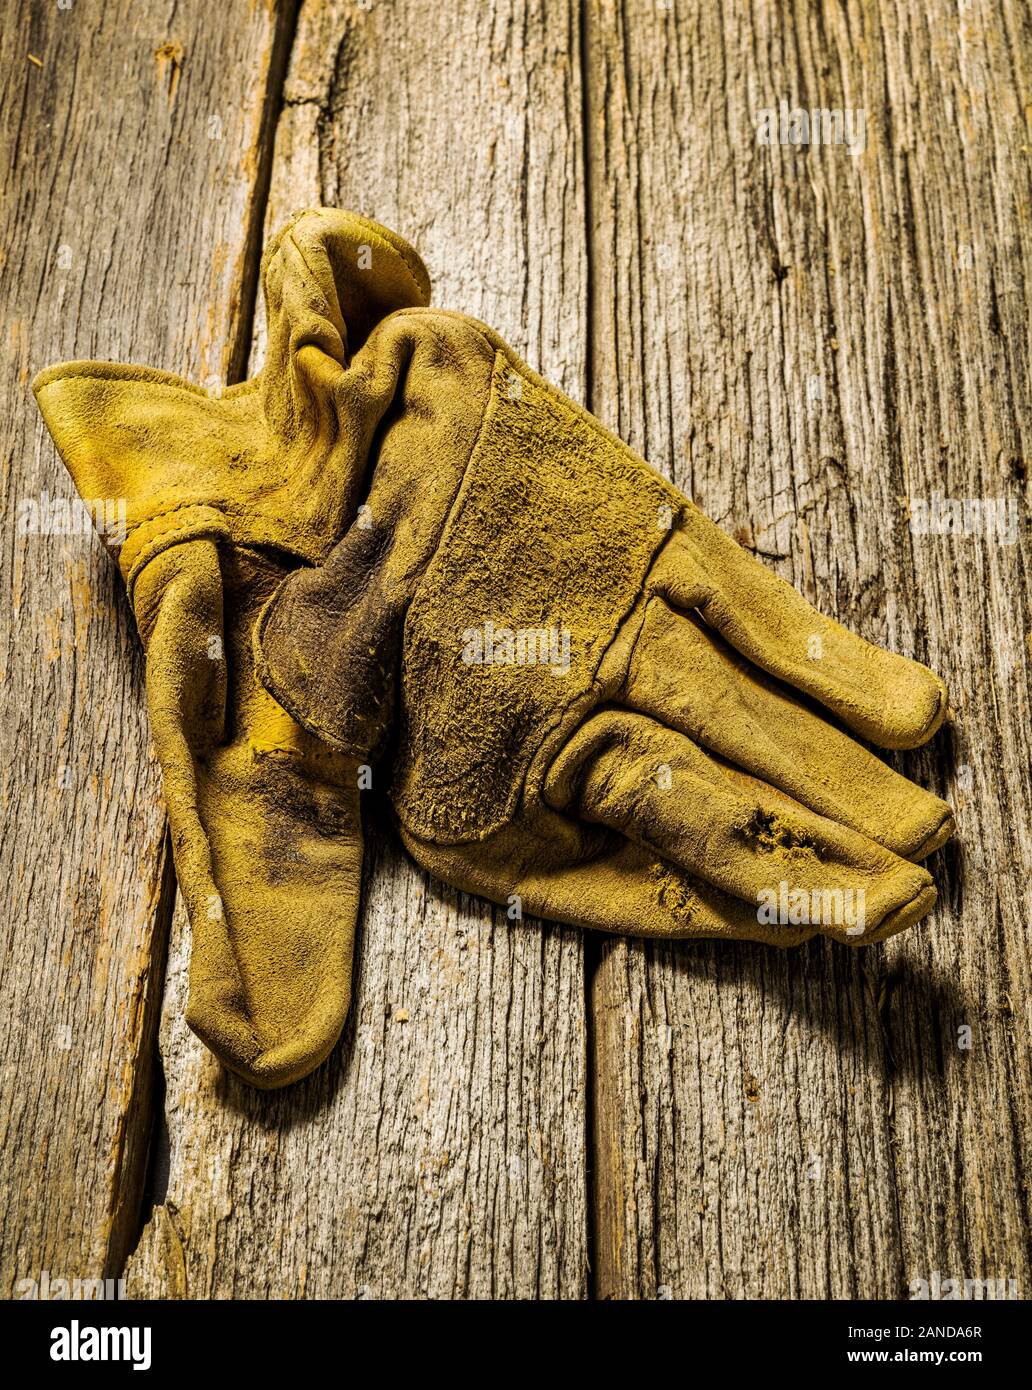 Studio still life close-up of worn leather work gloves Stock Photo